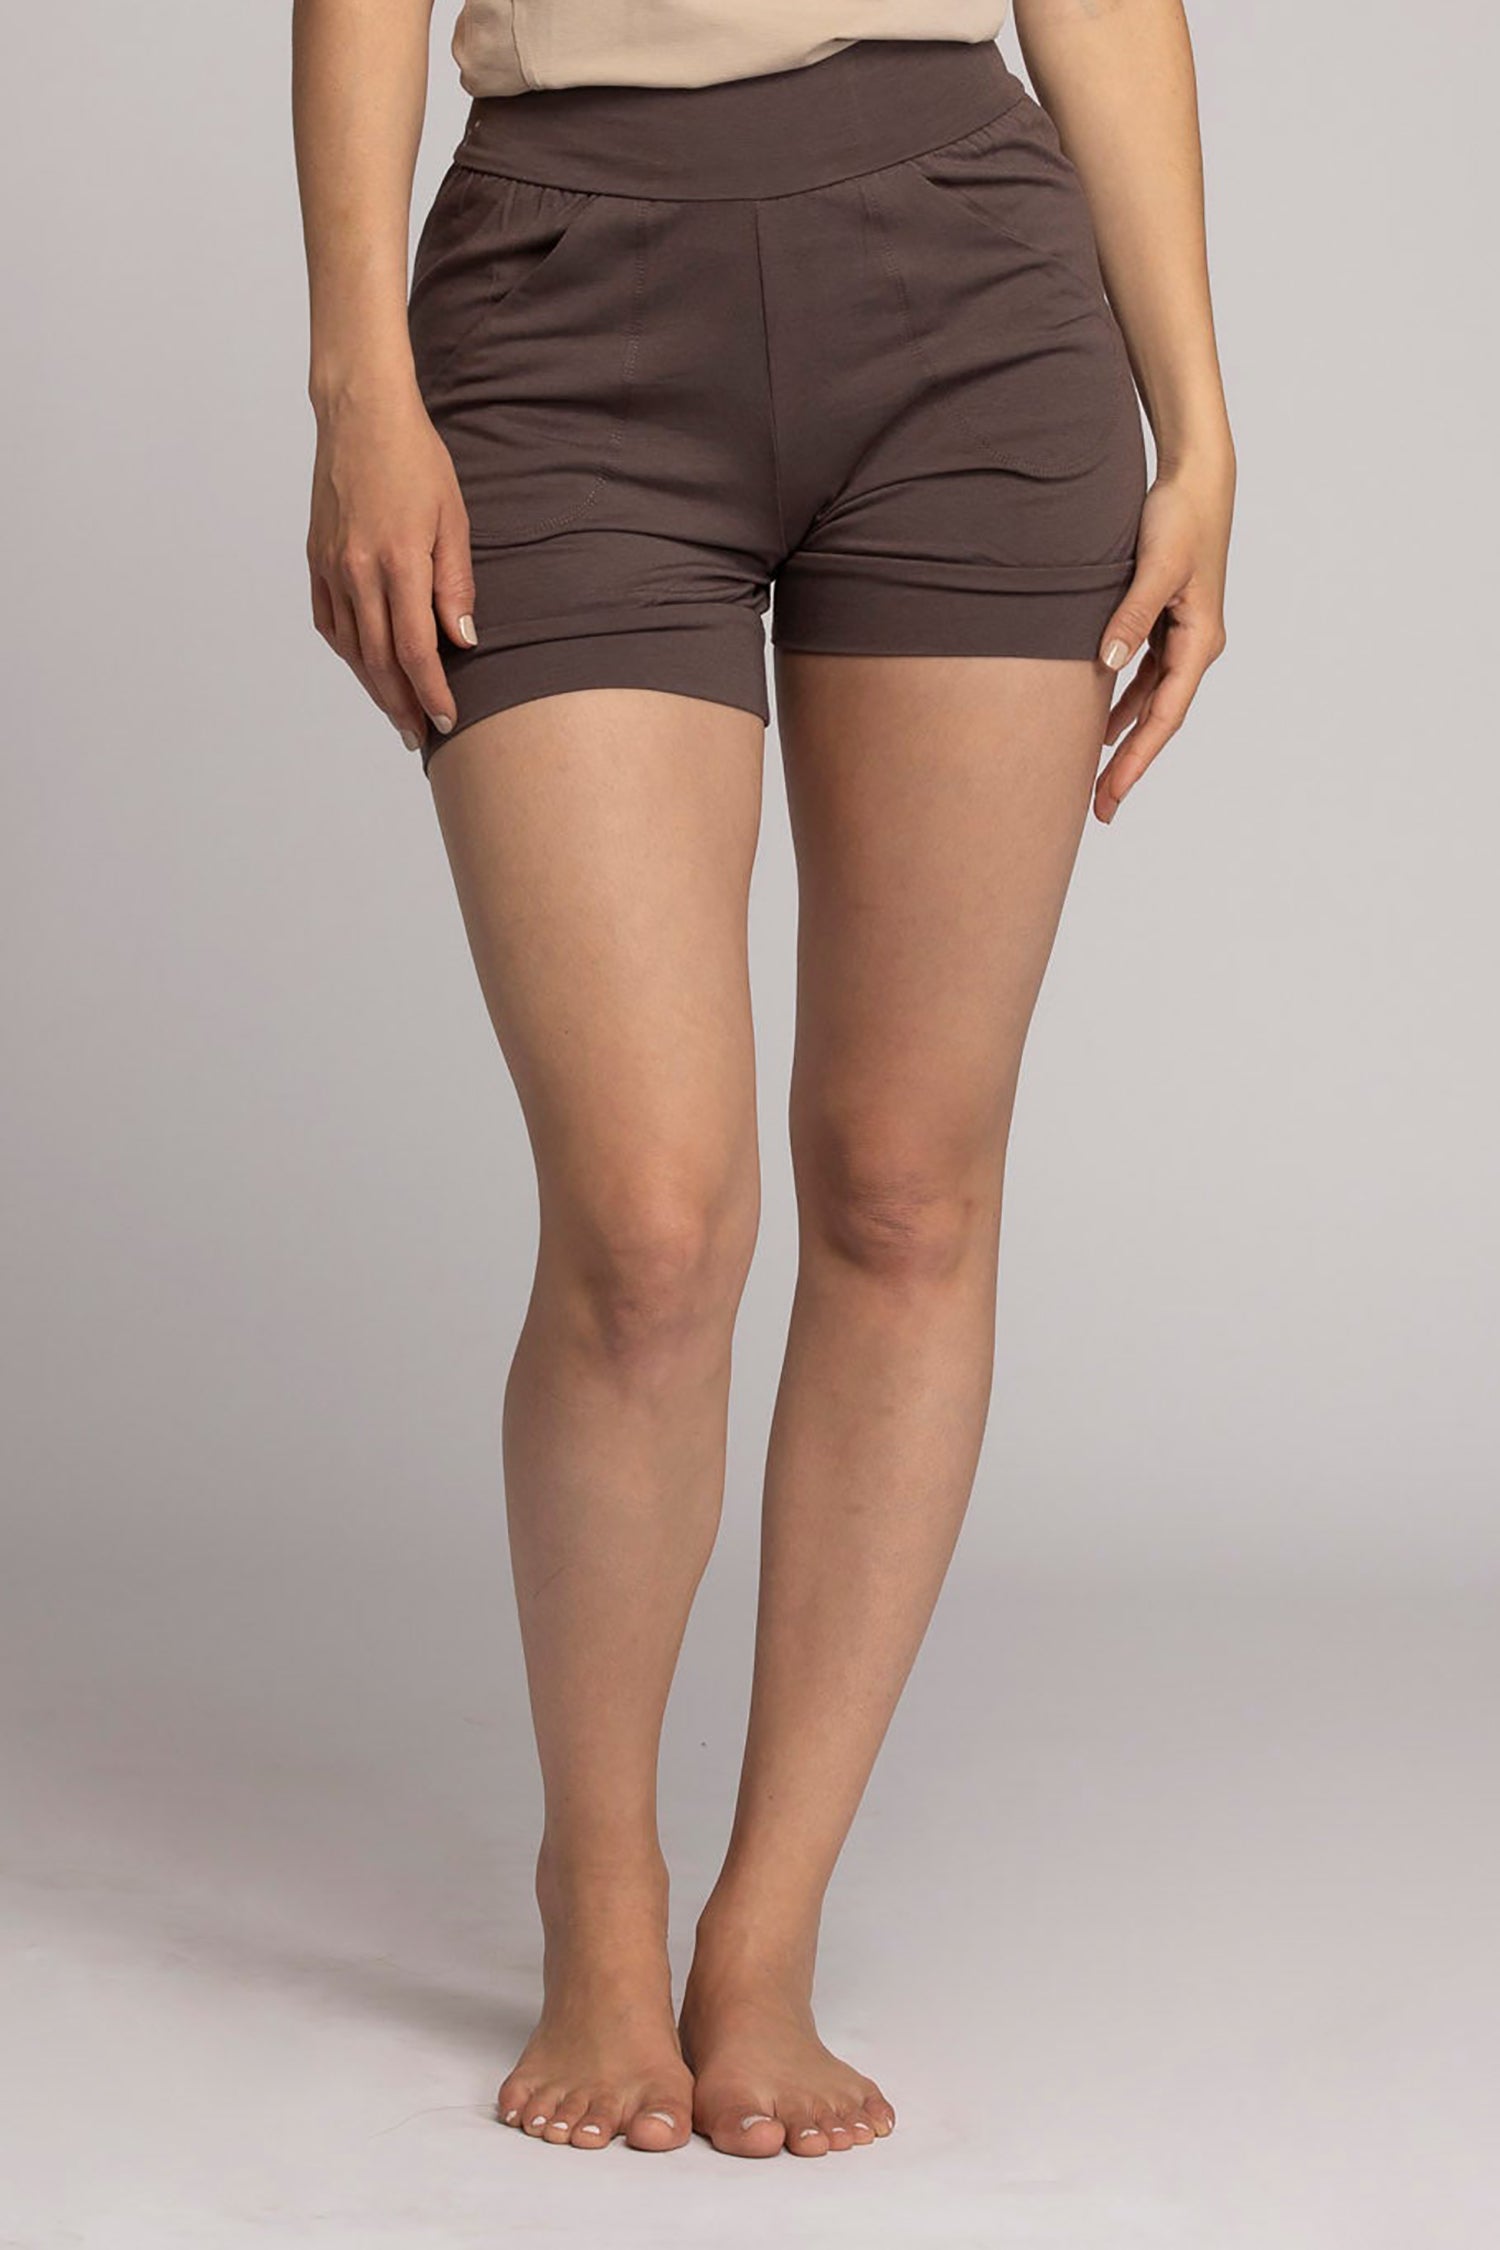 Mika Yoga Wear Betty Hot Yoga Shorts at